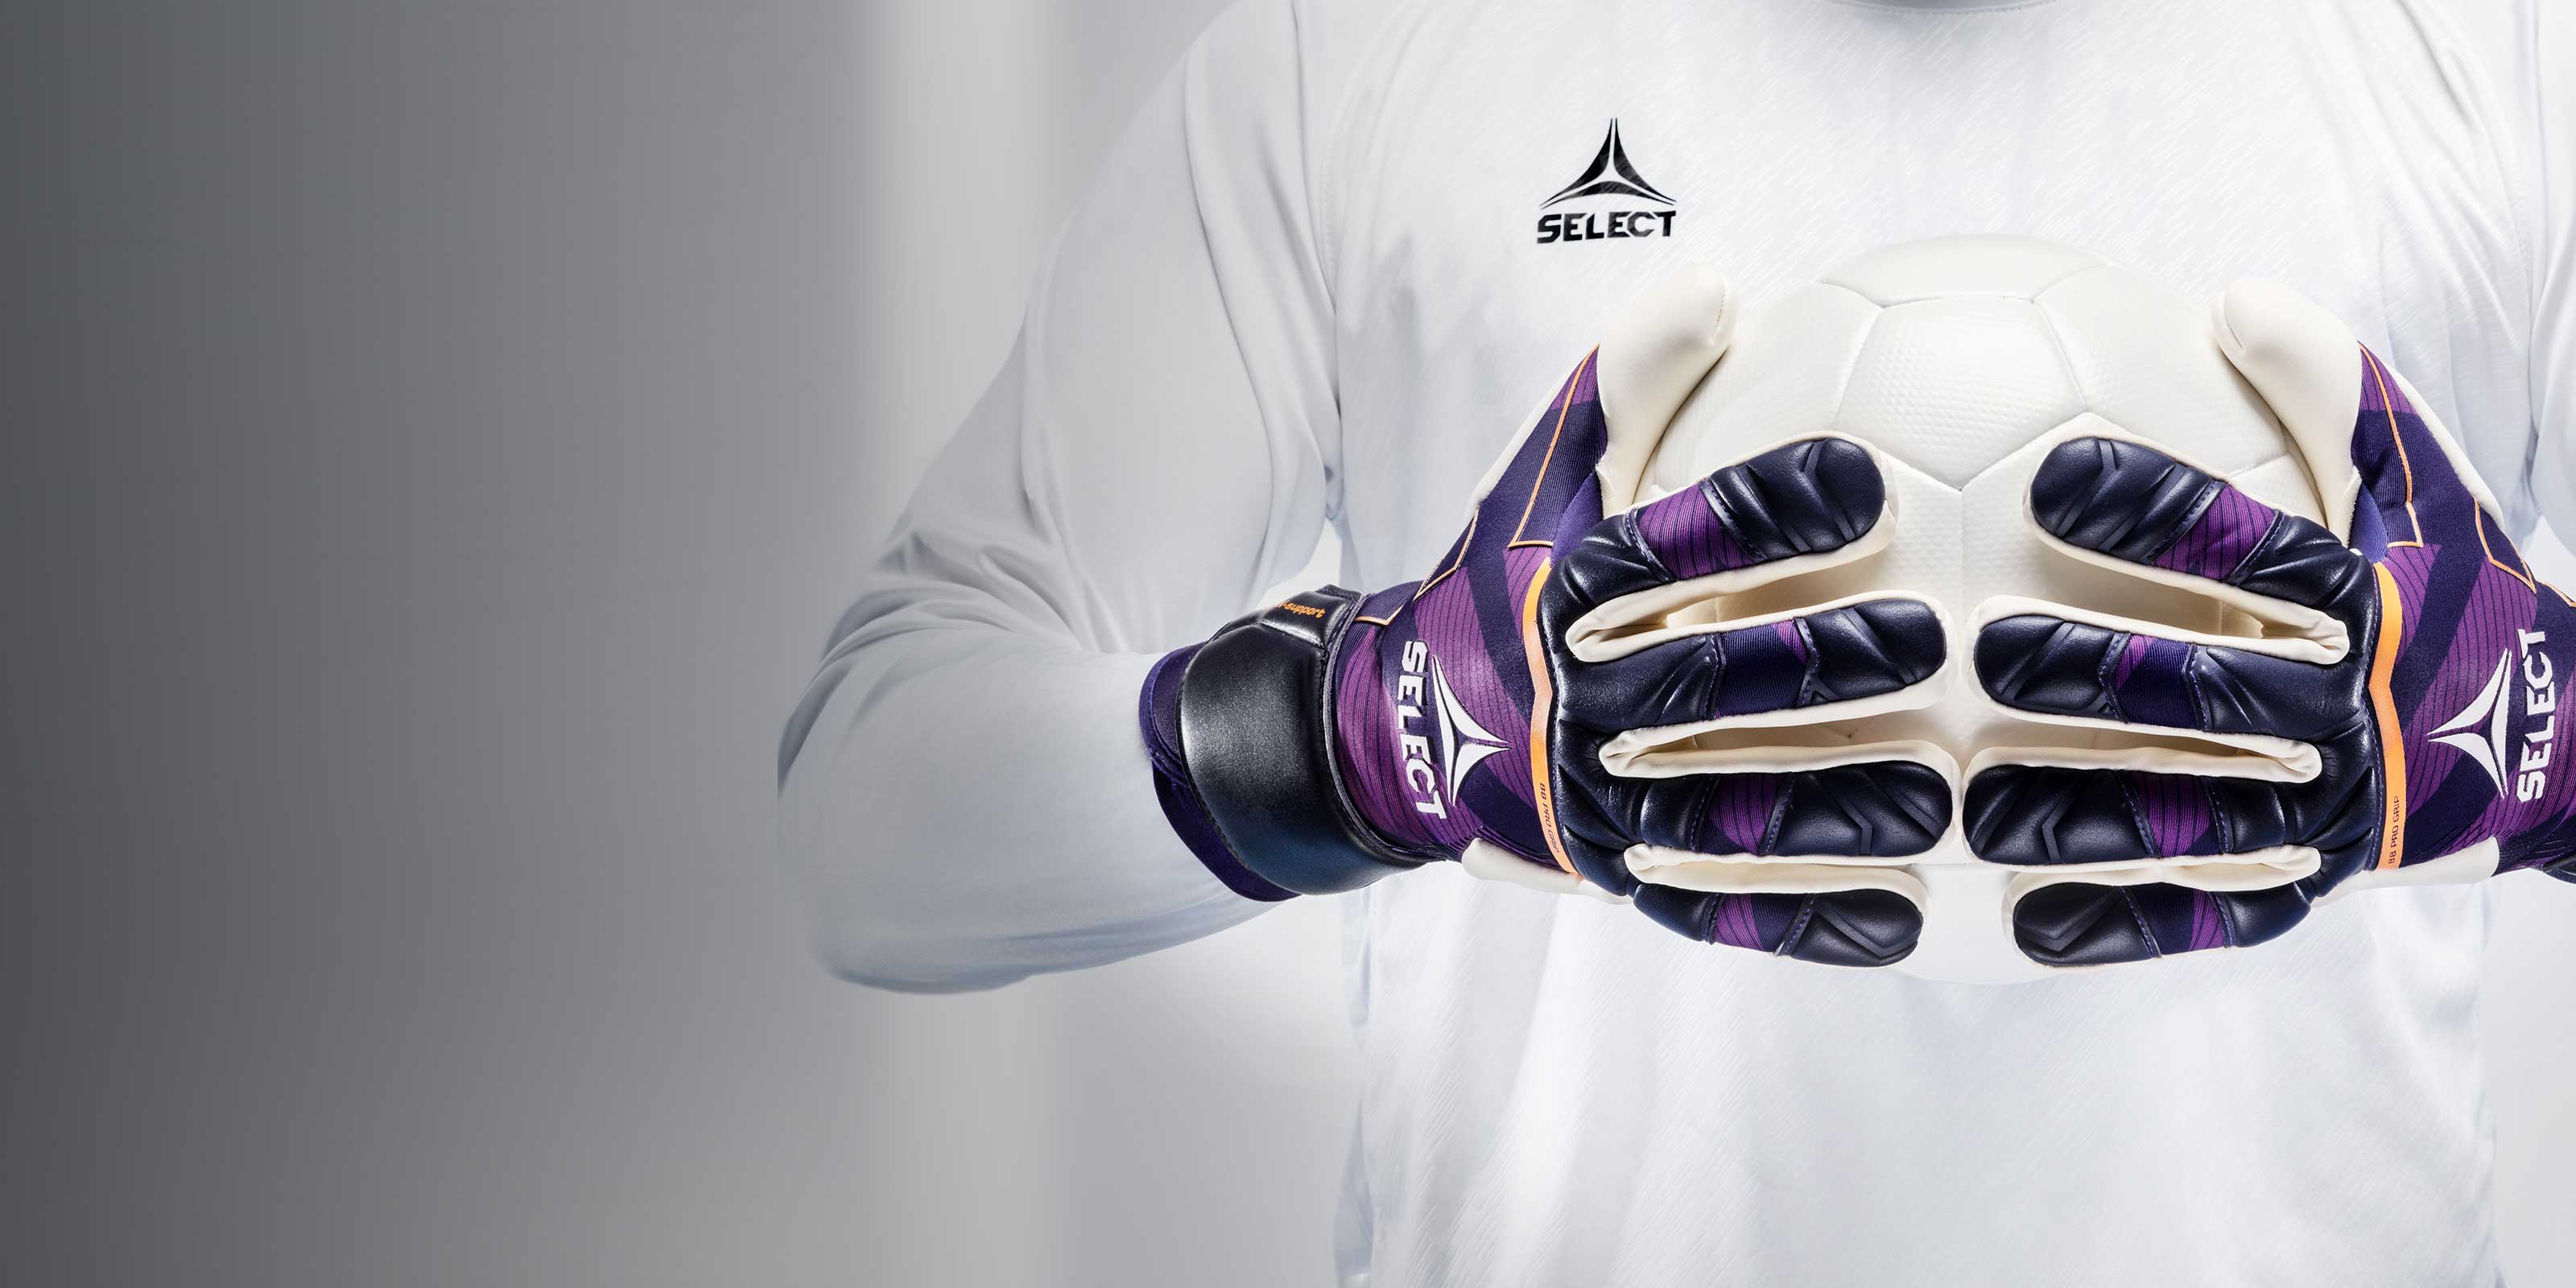 Goalkeeper gloves for professionals